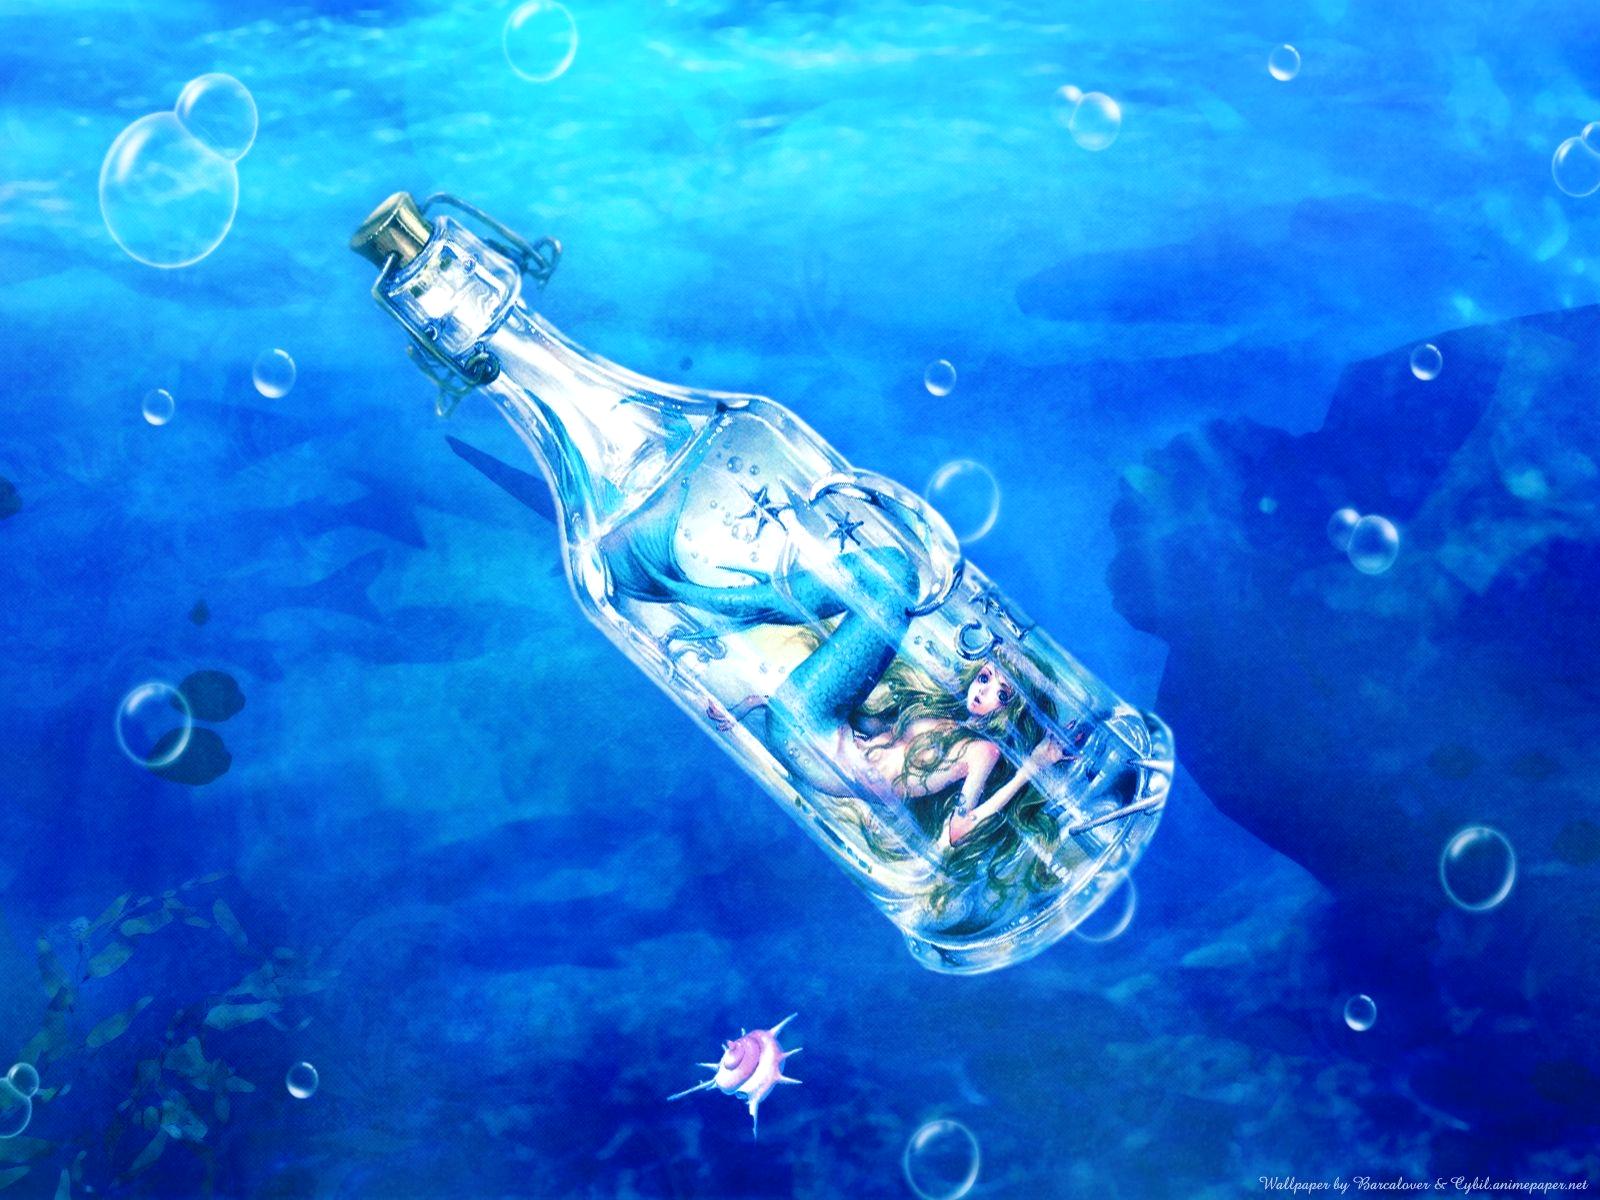 49+ Anime Mermaid Wallpaper on WallpaperSafari